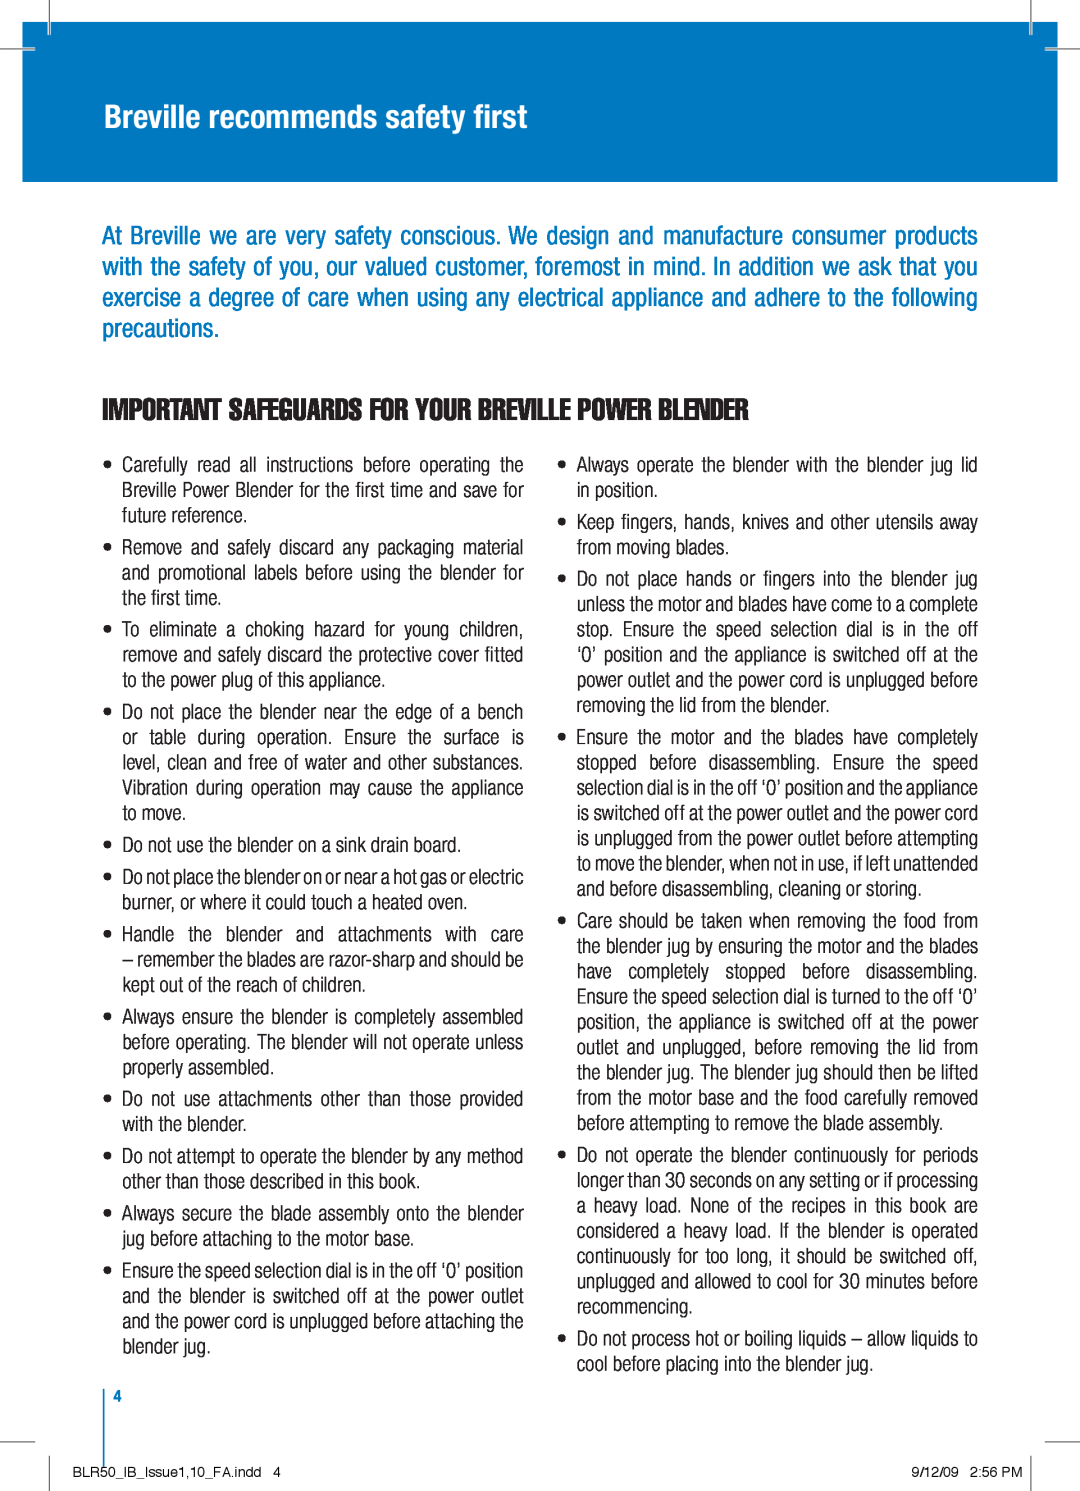 Breville BLR50 manual Breville recommends safety first, IMPORTANT SAFEGUARDS FOR YOUR BREVILLE power blENDER 